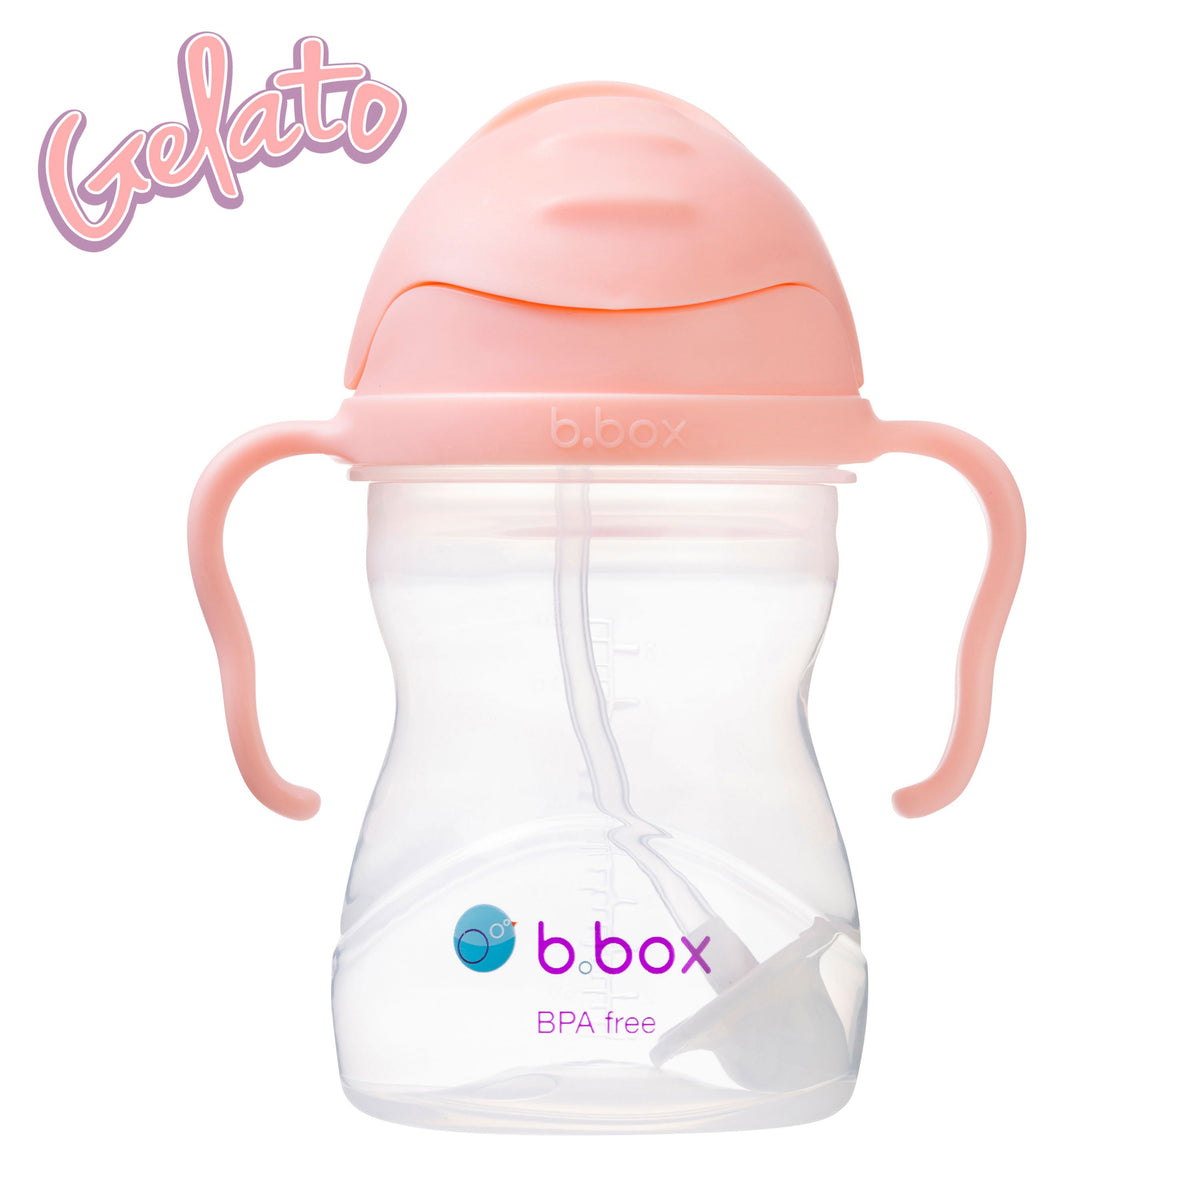 b.box *New* Sippy Cup - Gelato Pink - Tutti Frutii